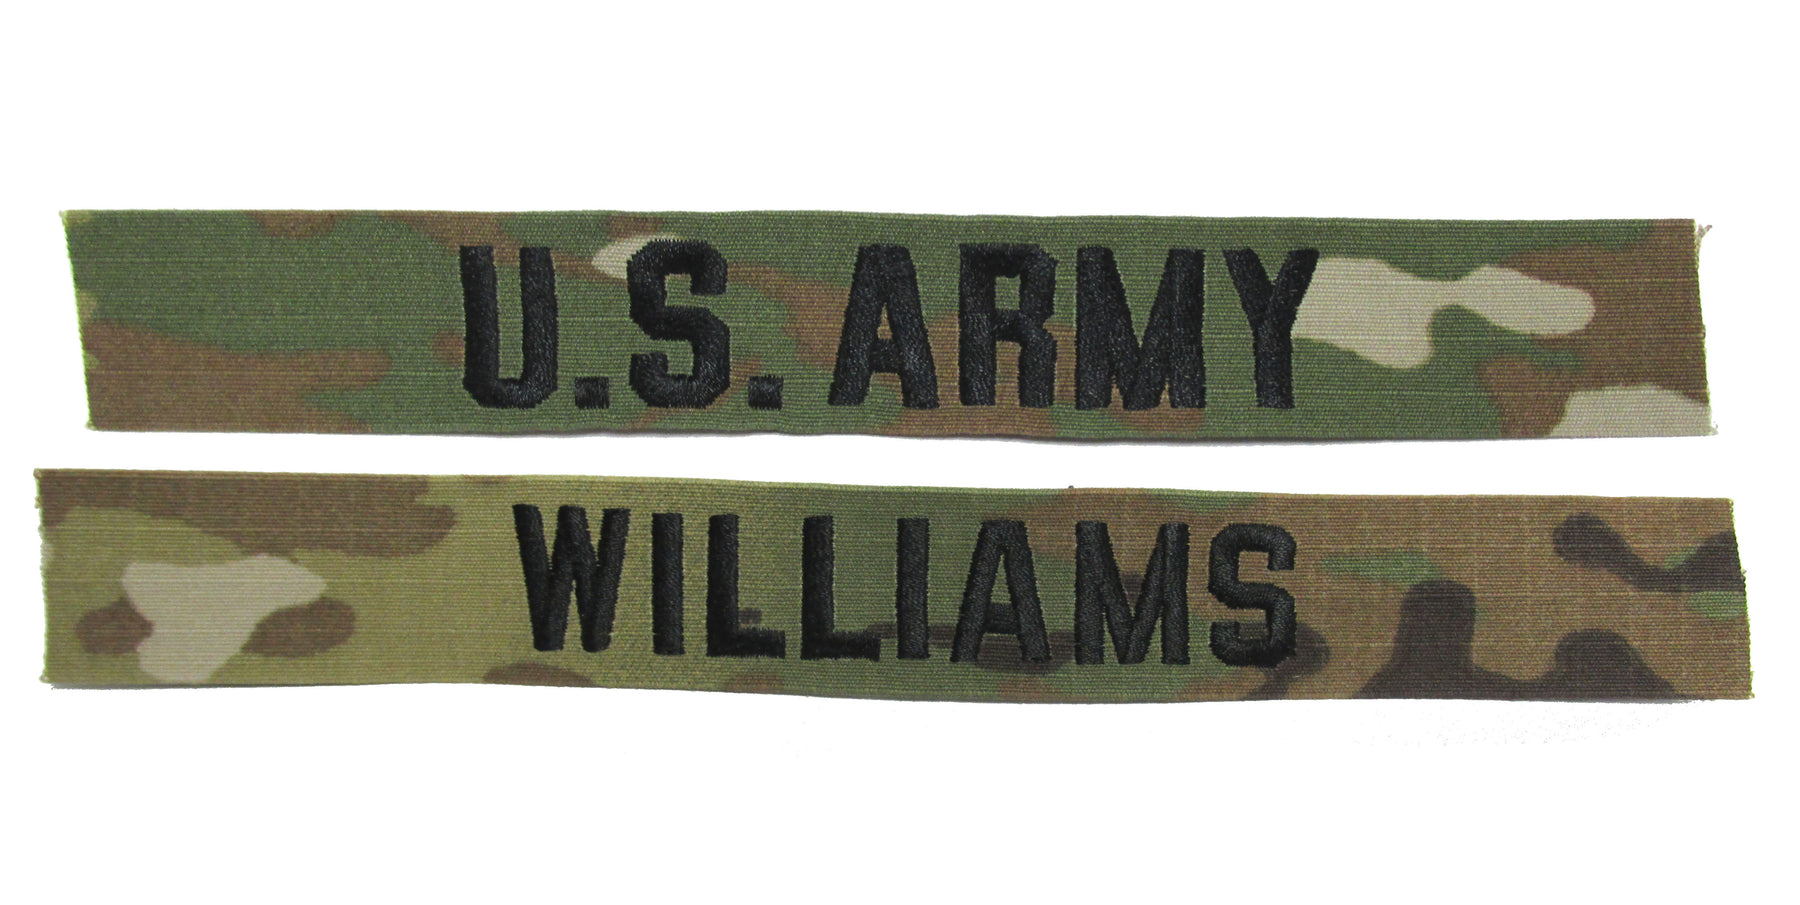 2 Piece Custom Army Name Tape Set - SEW ON - 3-Color OCP